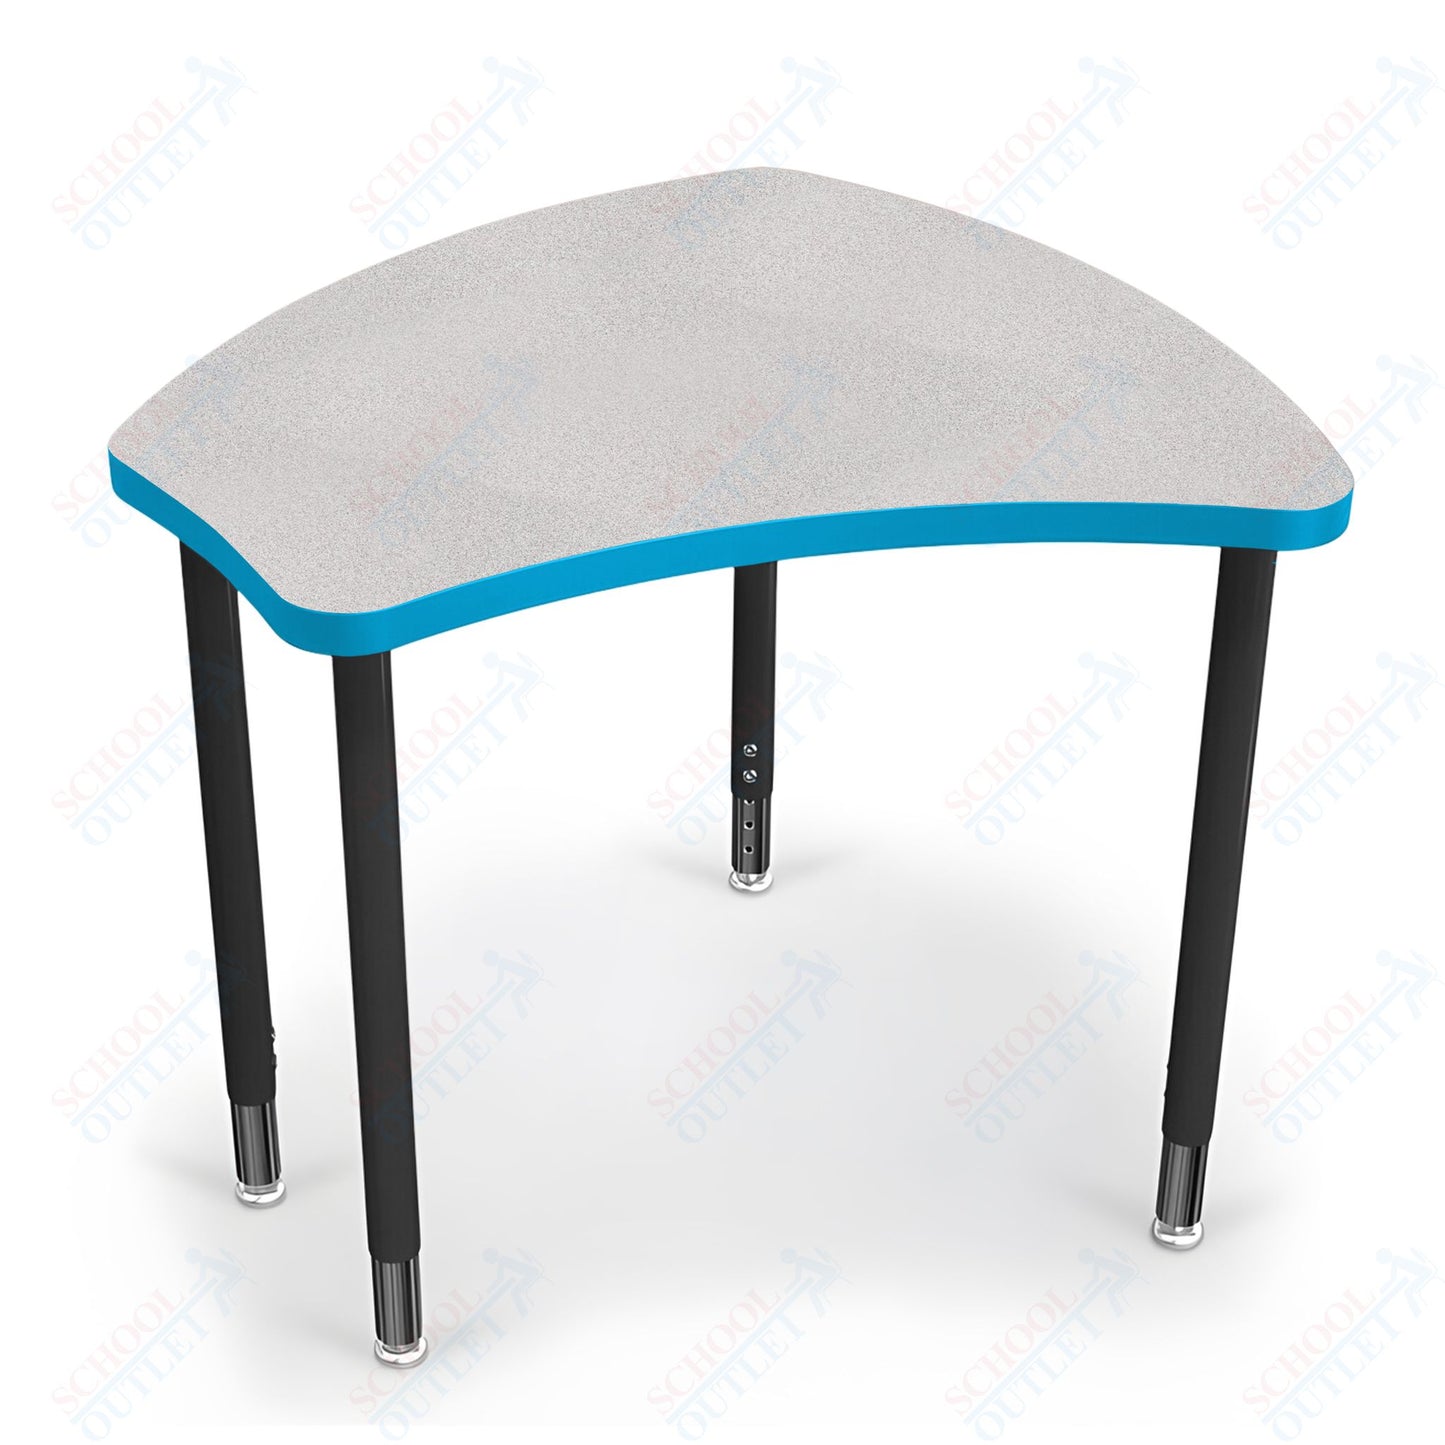 Mooreco Small Hierarchy Shape Standard Desk Adjustable Height 22" - 32" - Black Leg - 11336X